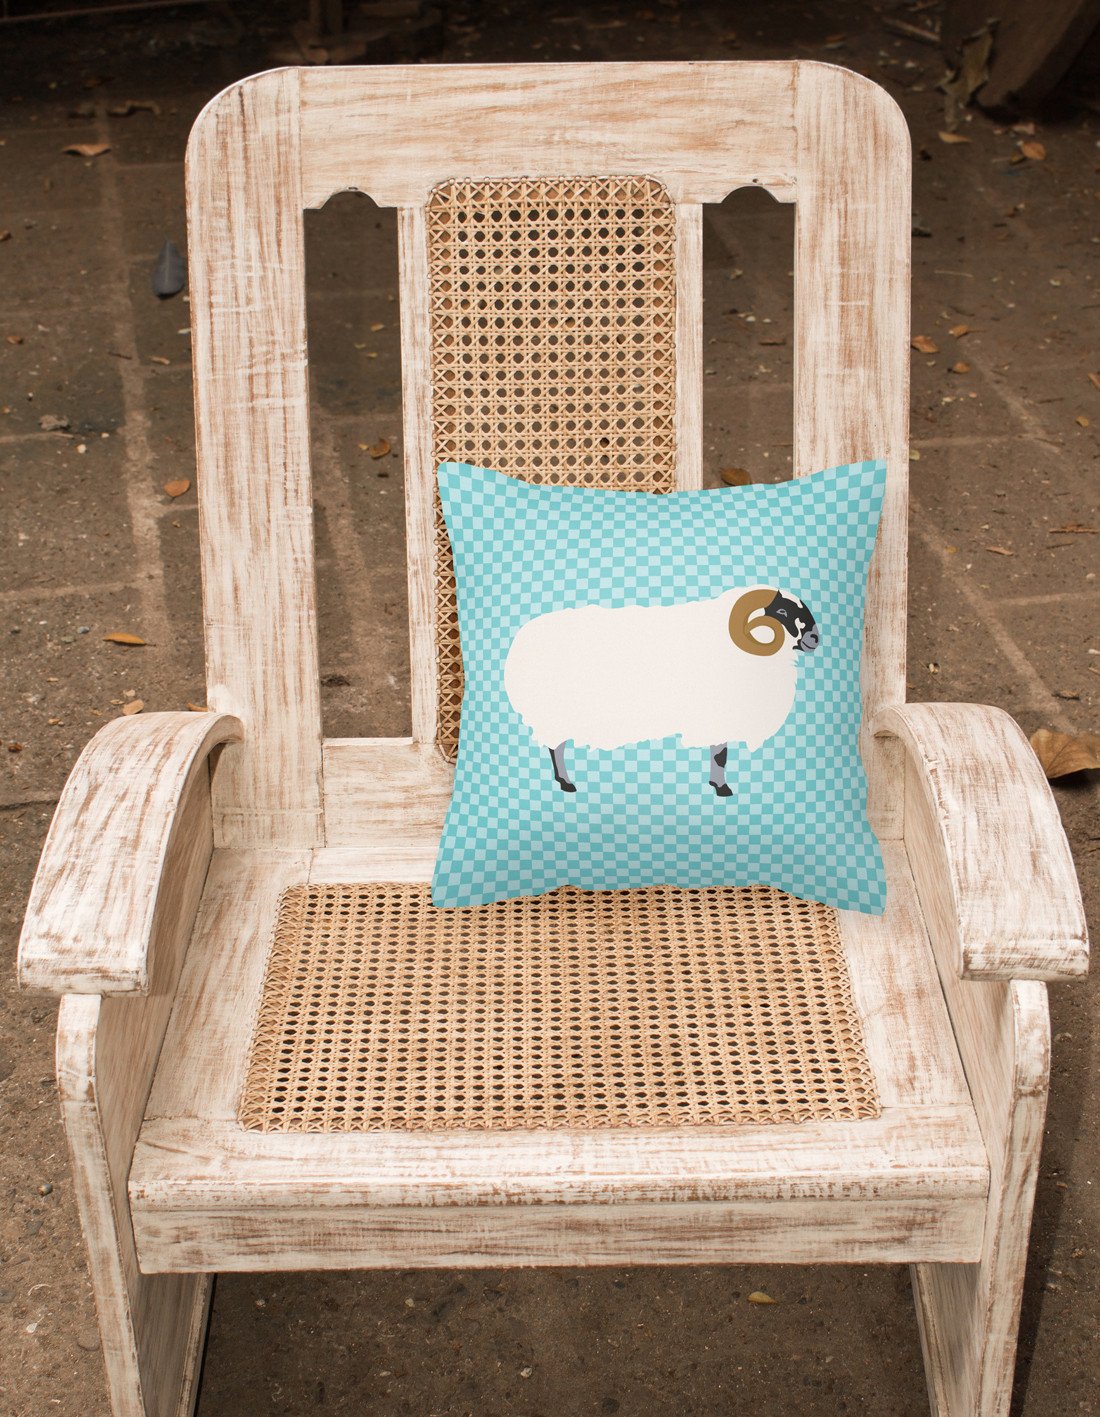 Scottish Blackface Sheep Blue Check Fabric Decorative Pillow BB8147PW1818 by Caroline's Treasures